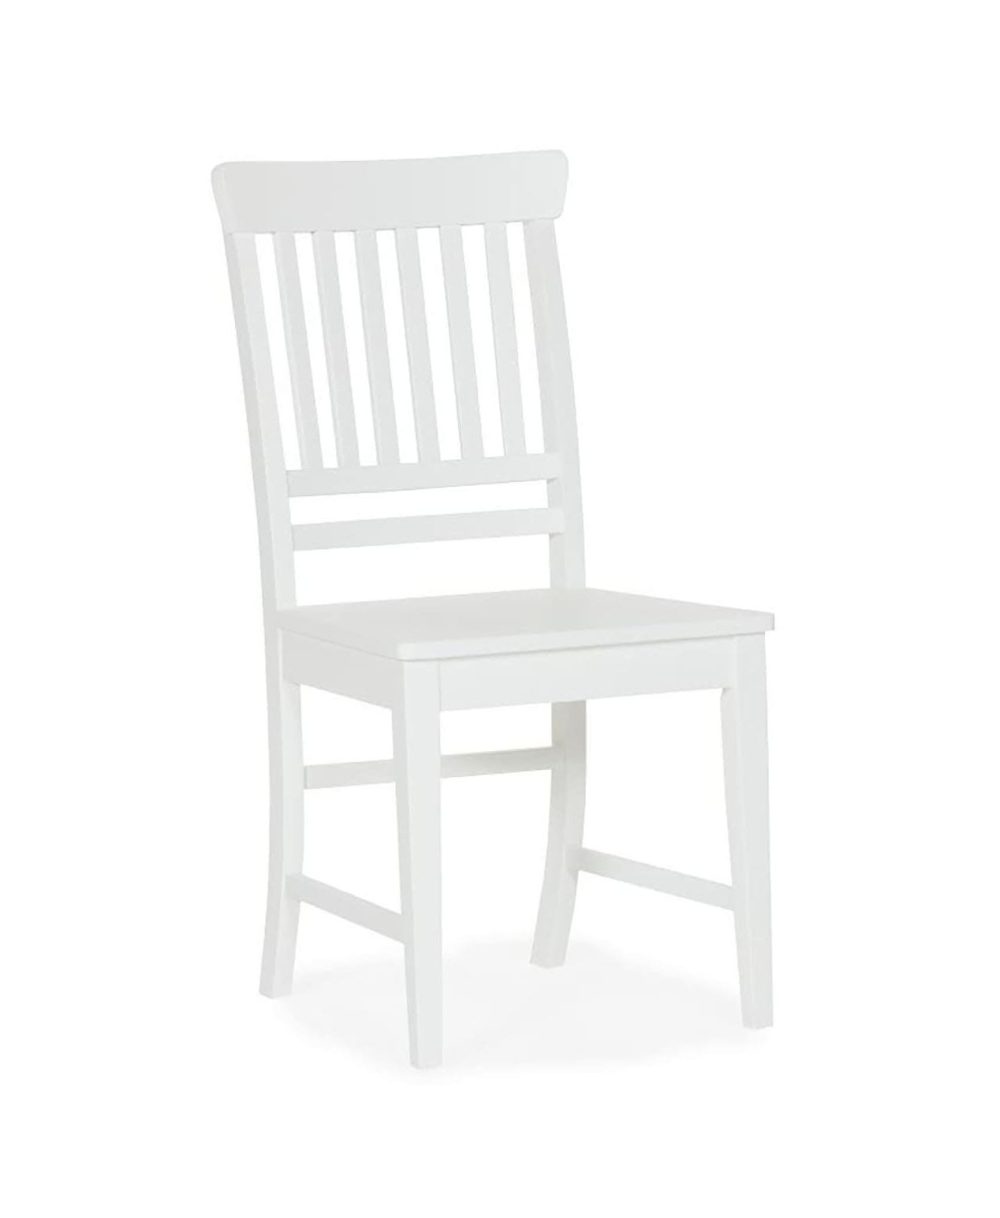 visingso-chair-white-profile-1.jpg